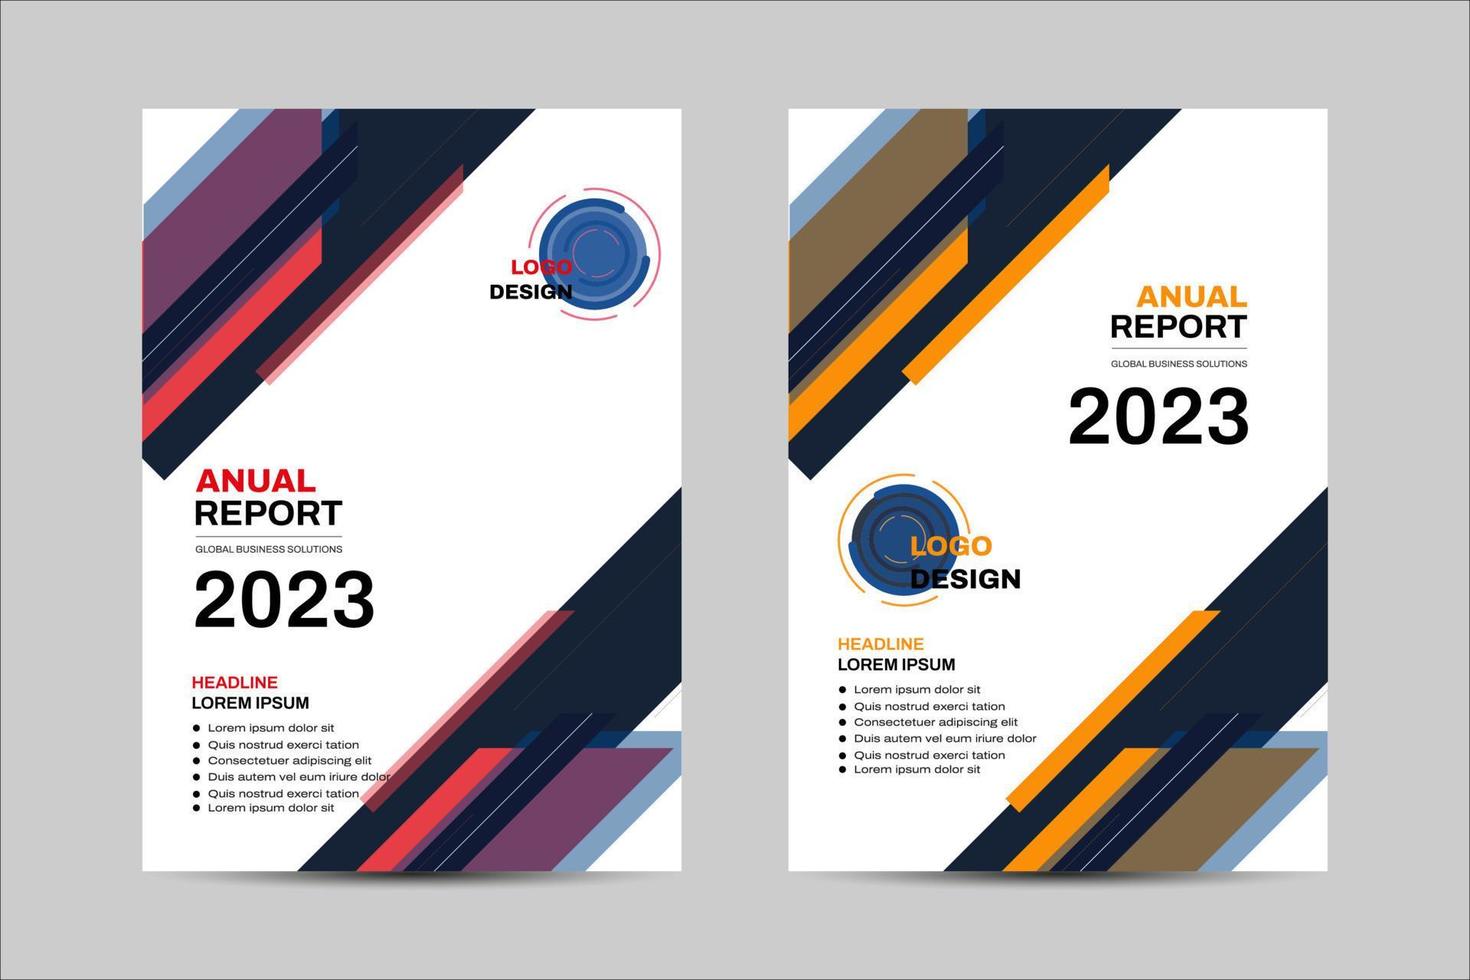 Template vector design for Brochure, Annual Report, Magazine, Poster, Corporate Presentation, Portfolio, Flyer, infographic,